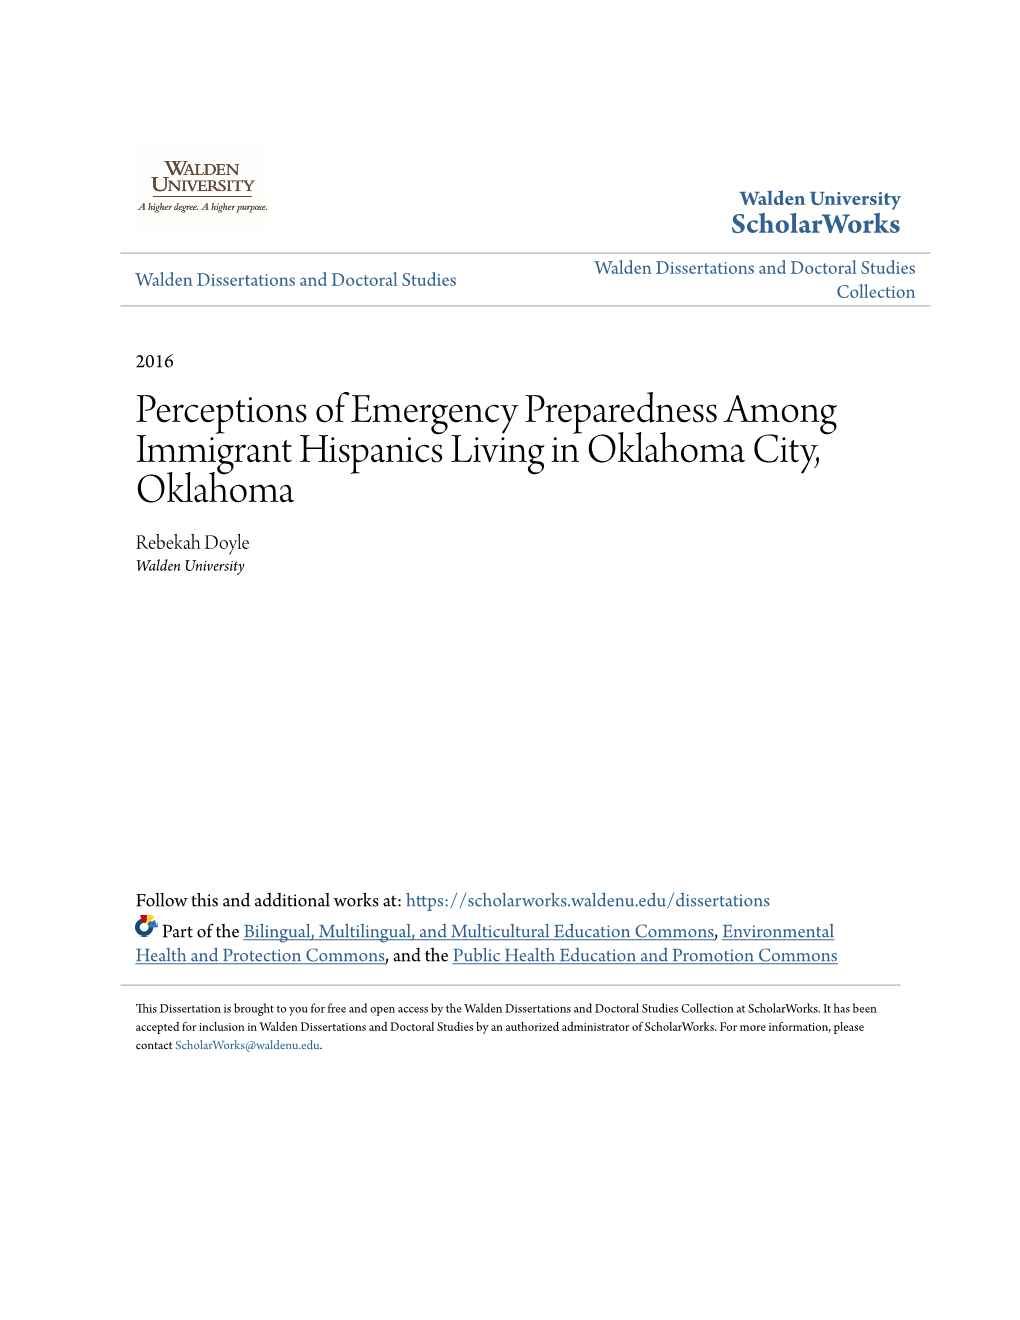 Perceptions of Emergency Preparedness Among Immigrant Hispanics Living in Oklahoma City, Oklahoma Rebekah Doyle Walden University